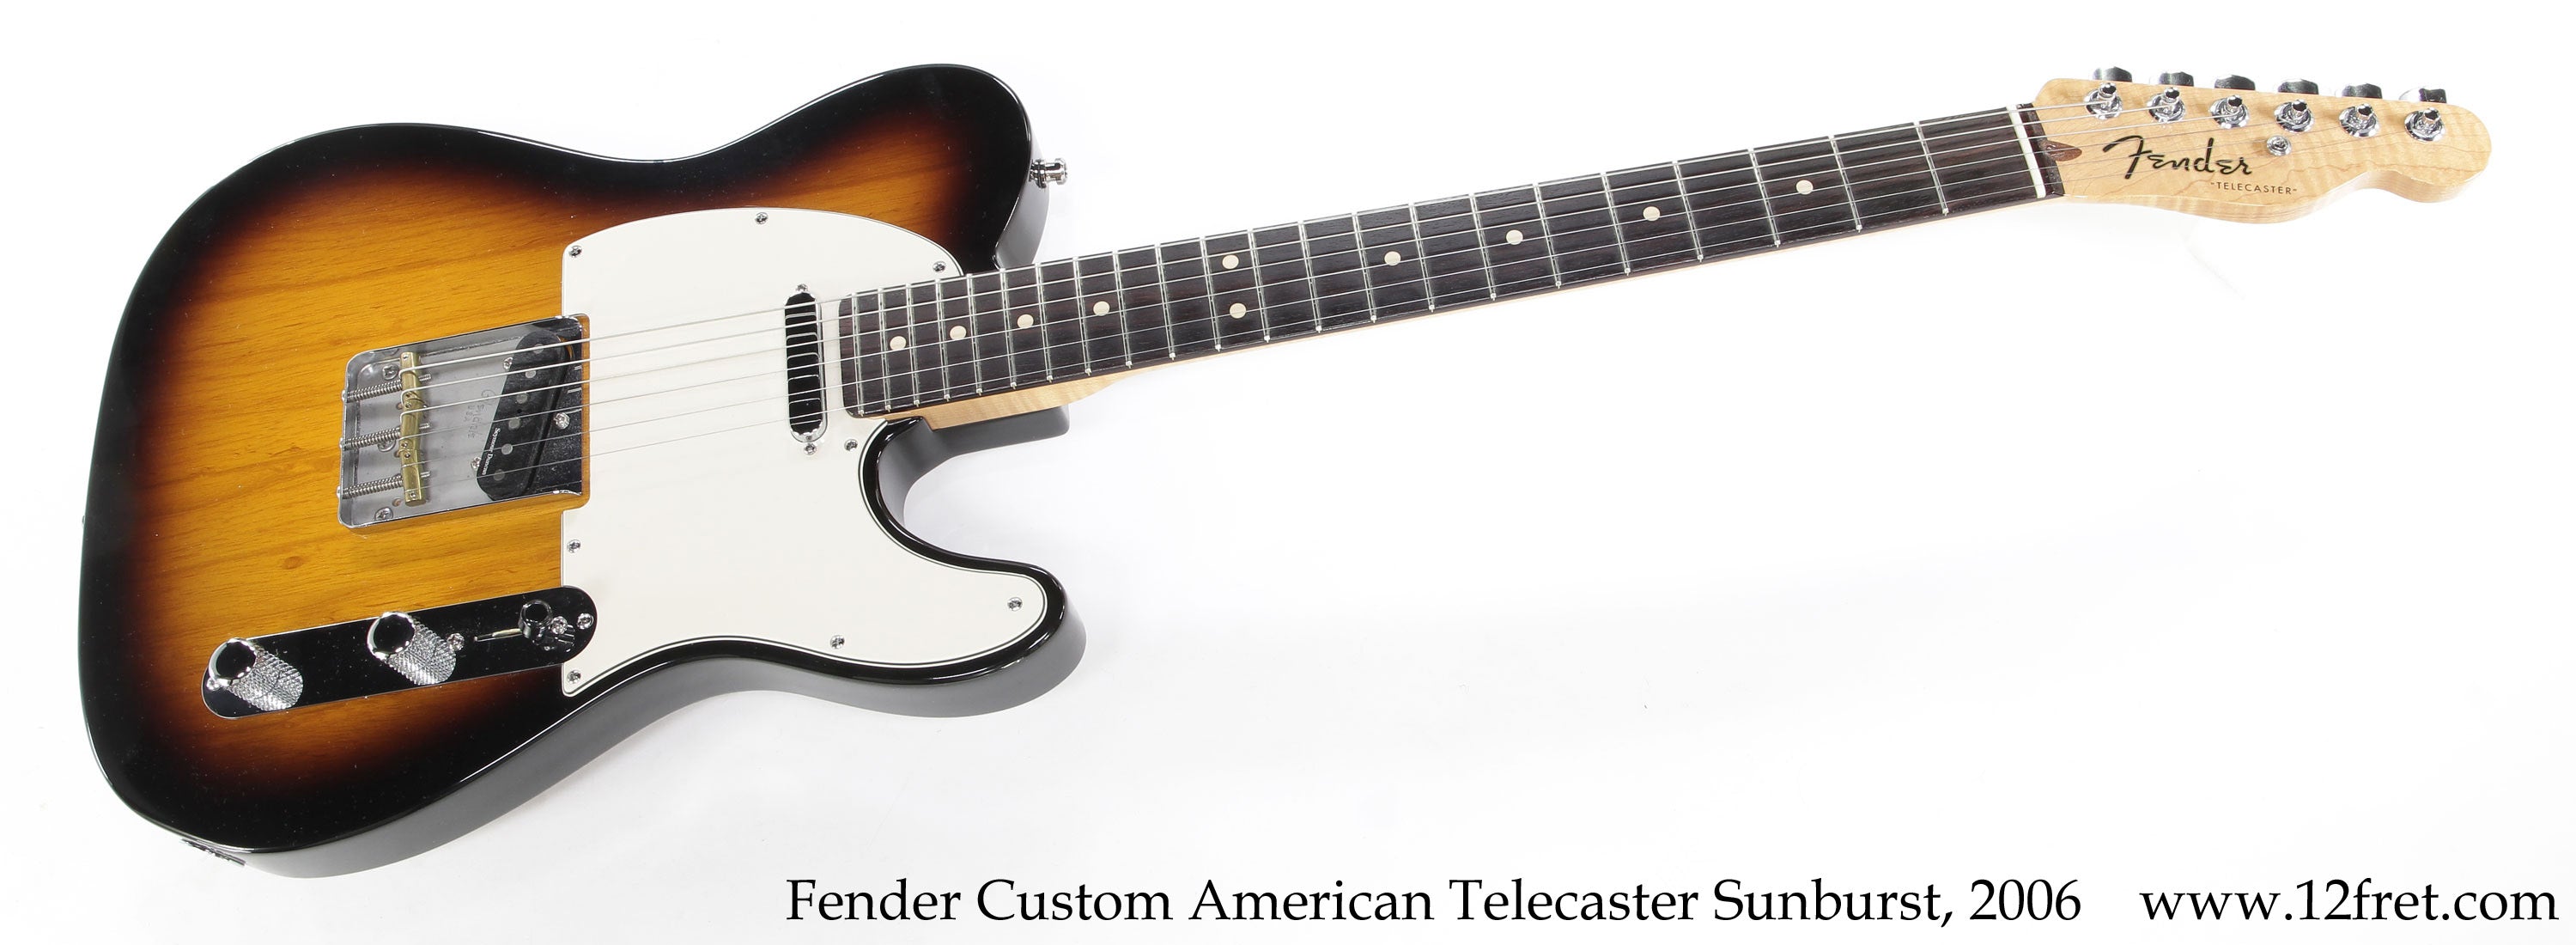 Fender Custom American Telecaster Sunburst, 2006  - The Twelfth Fret